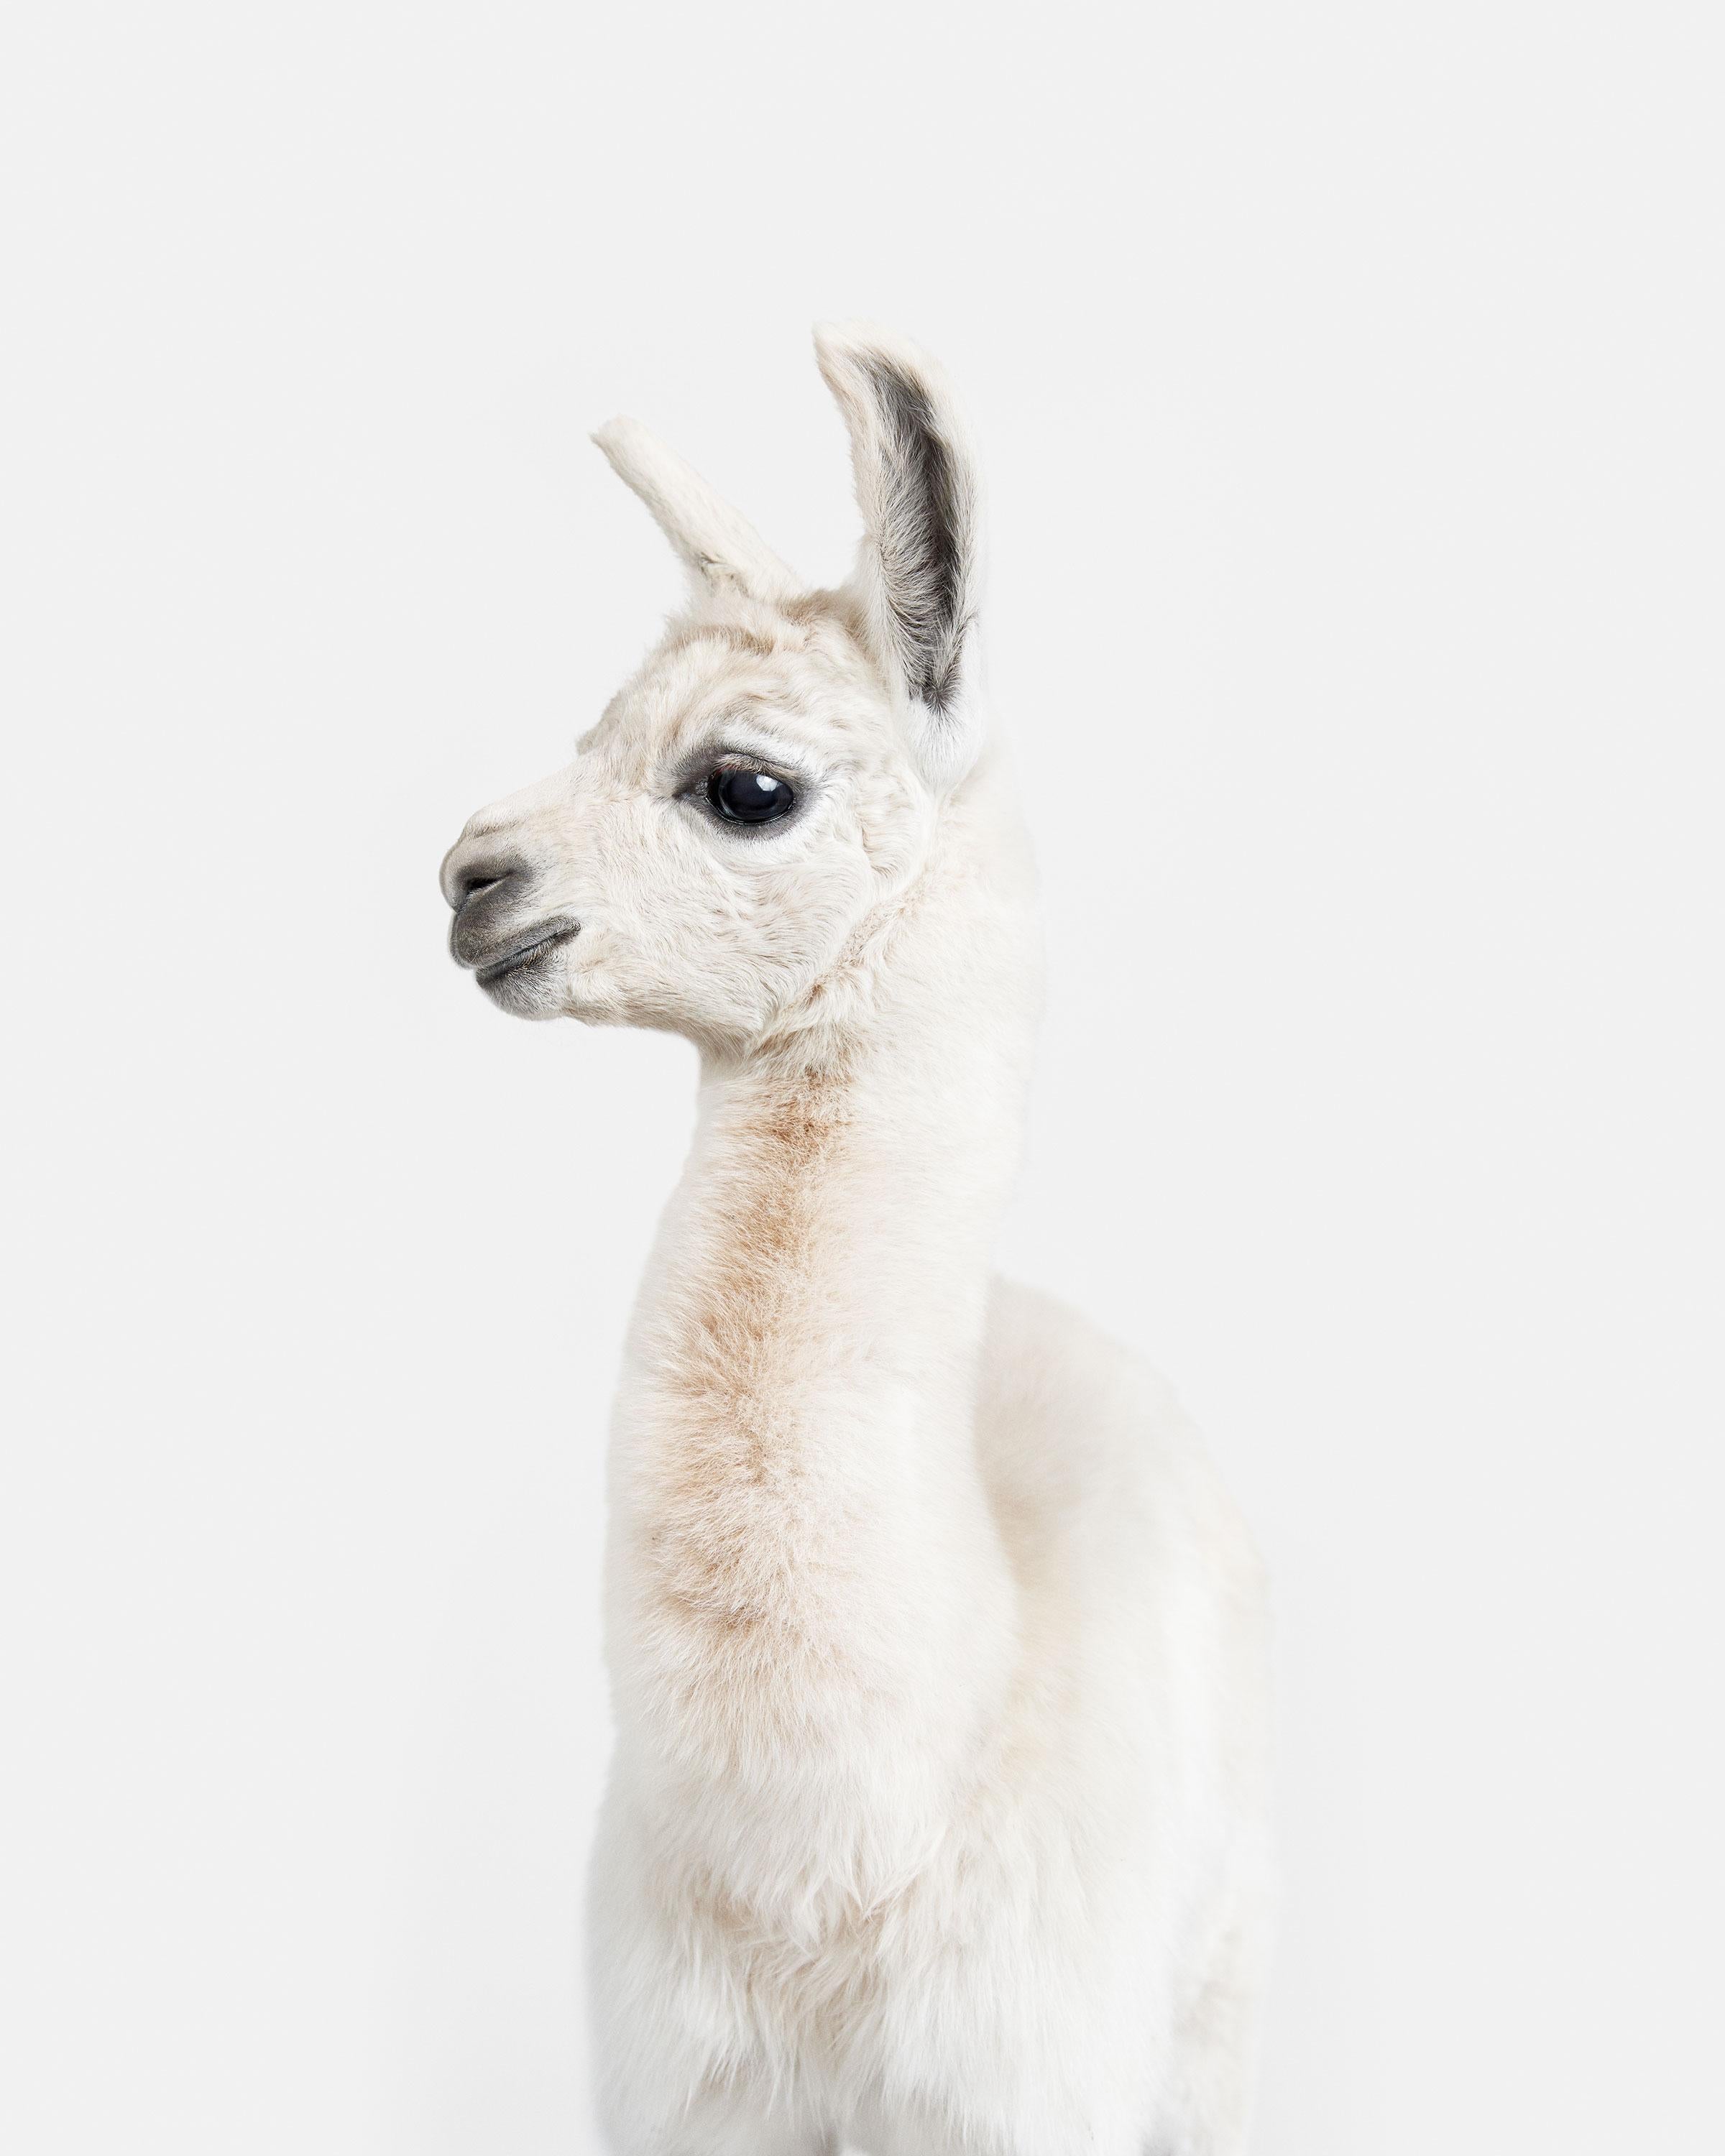 Randal Ford - Llama Baby, Photography 2018, Printed After